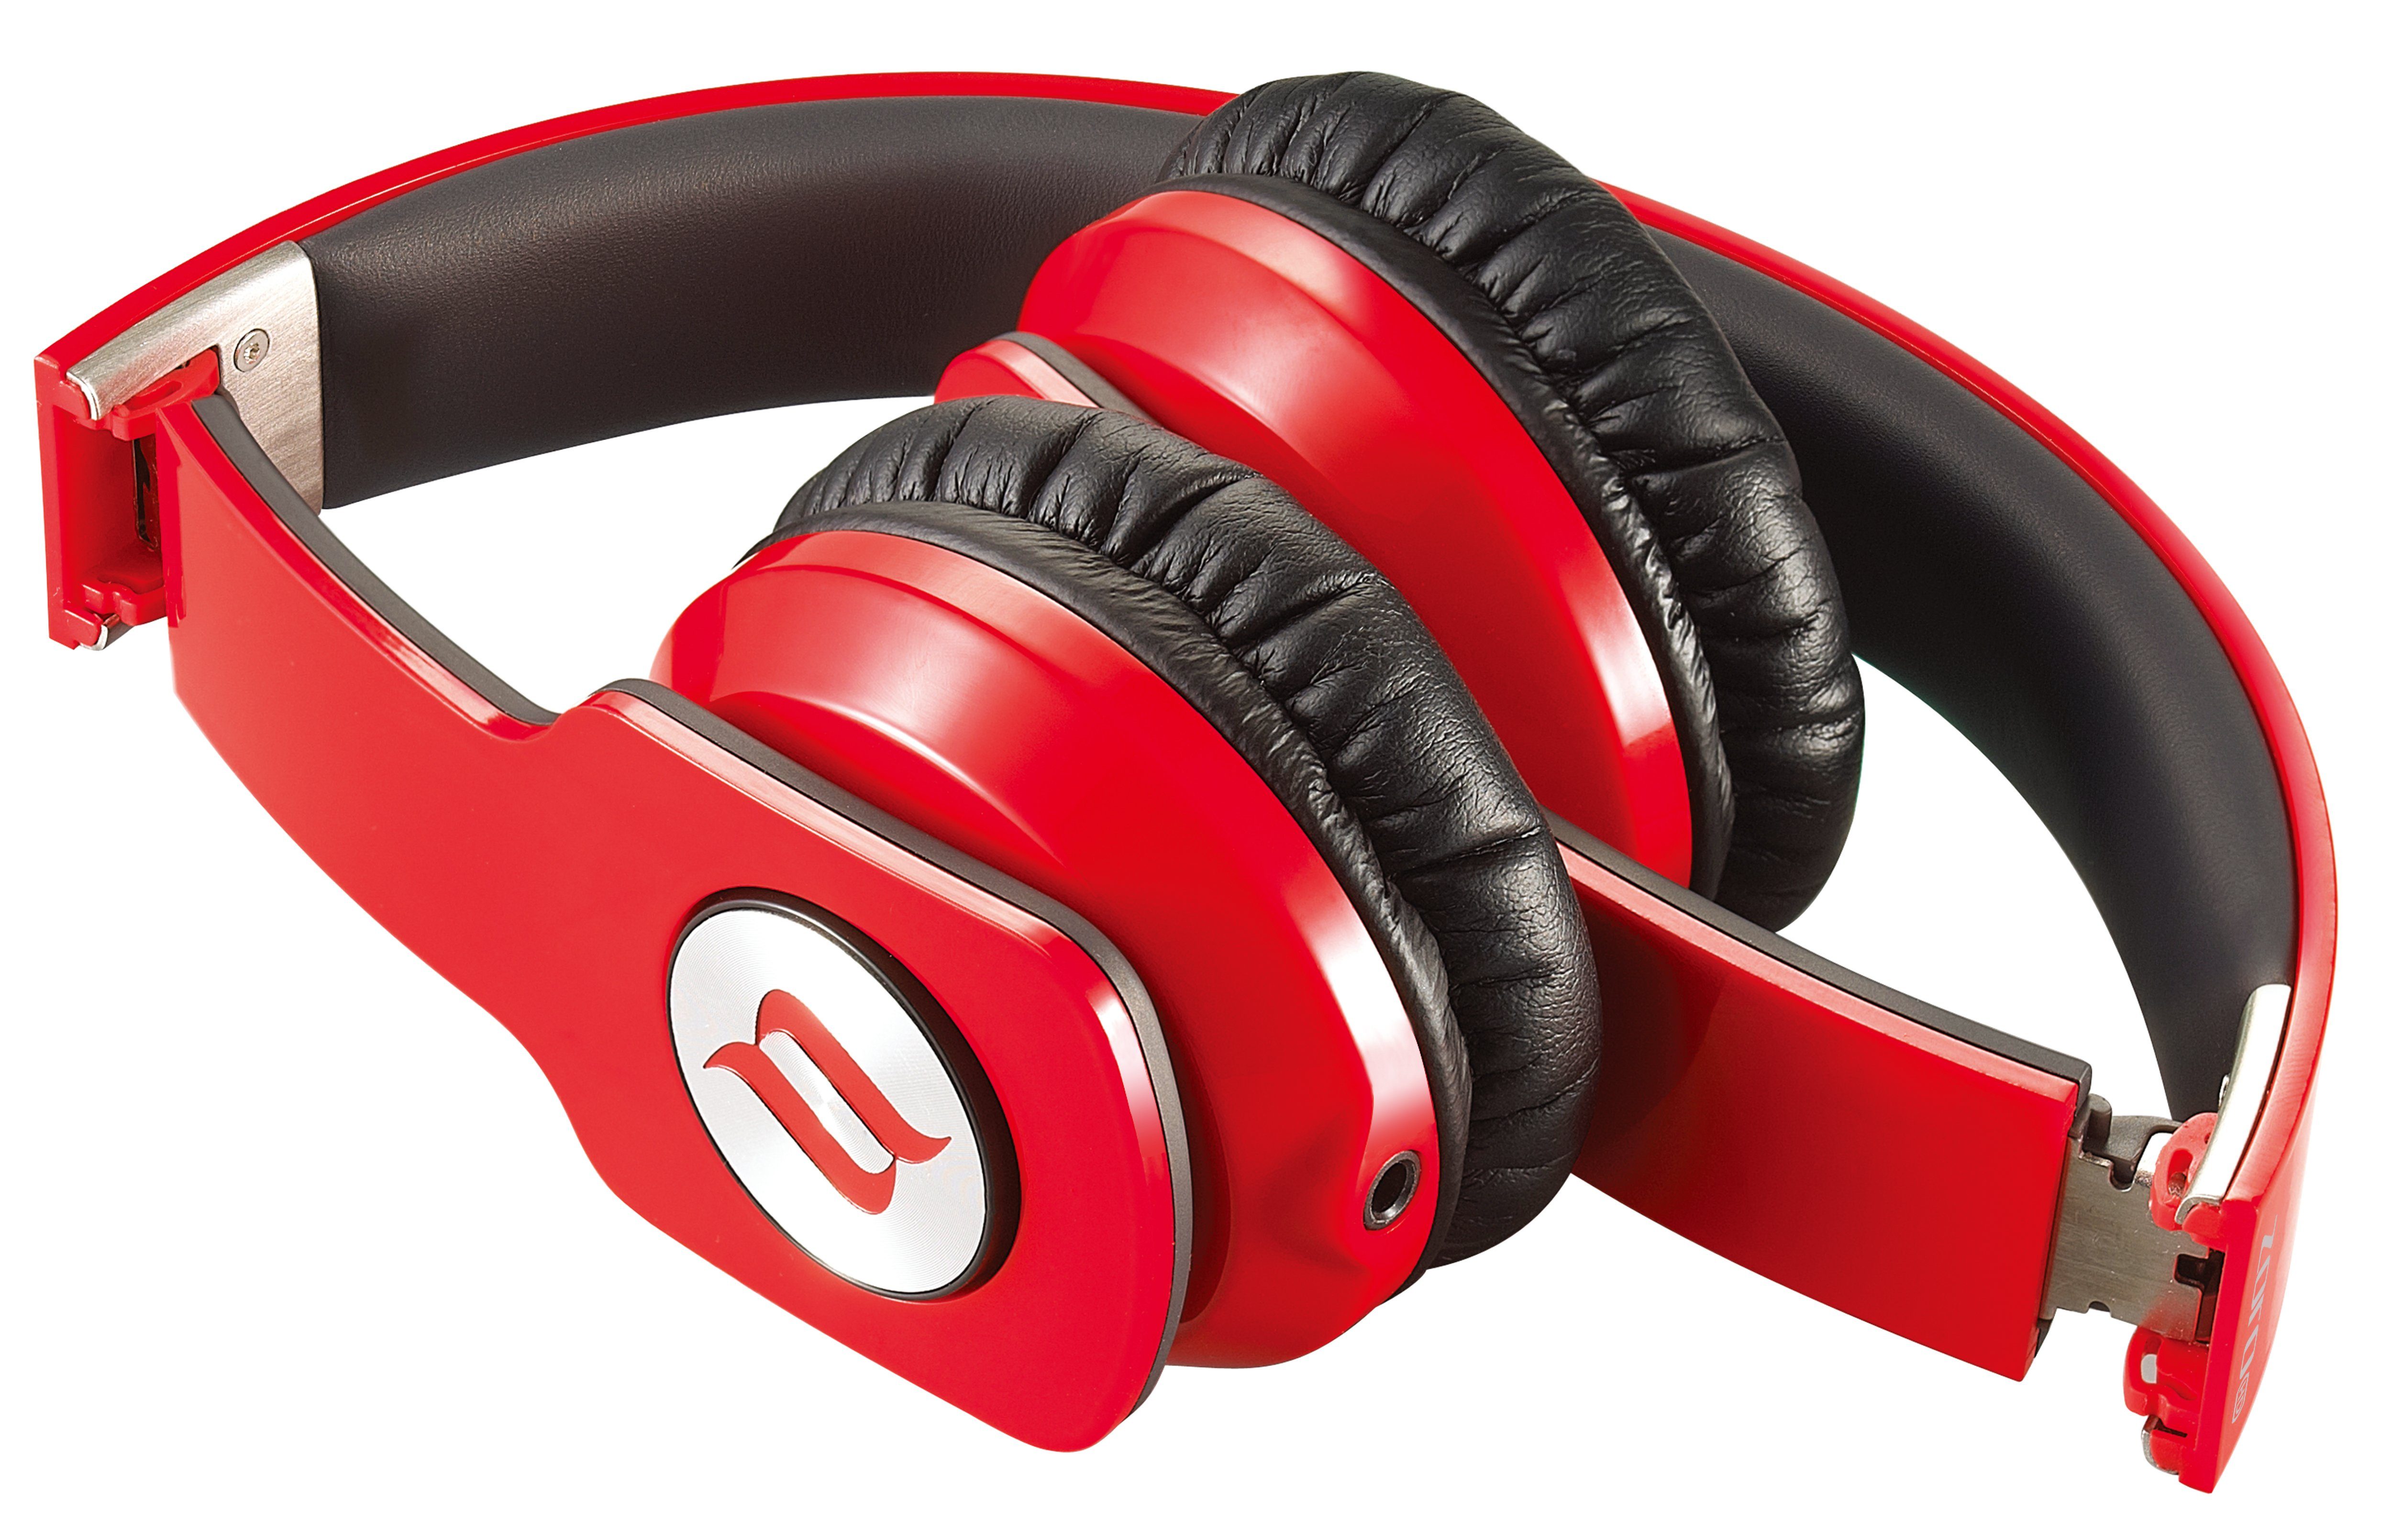 MF3120(S) Zoro Kopfhörer Zoro Poppstar Kopfhörer On-Ear-Kopfhörer Noontec HD Flachkabel) mit (kabelgebunden, Rot